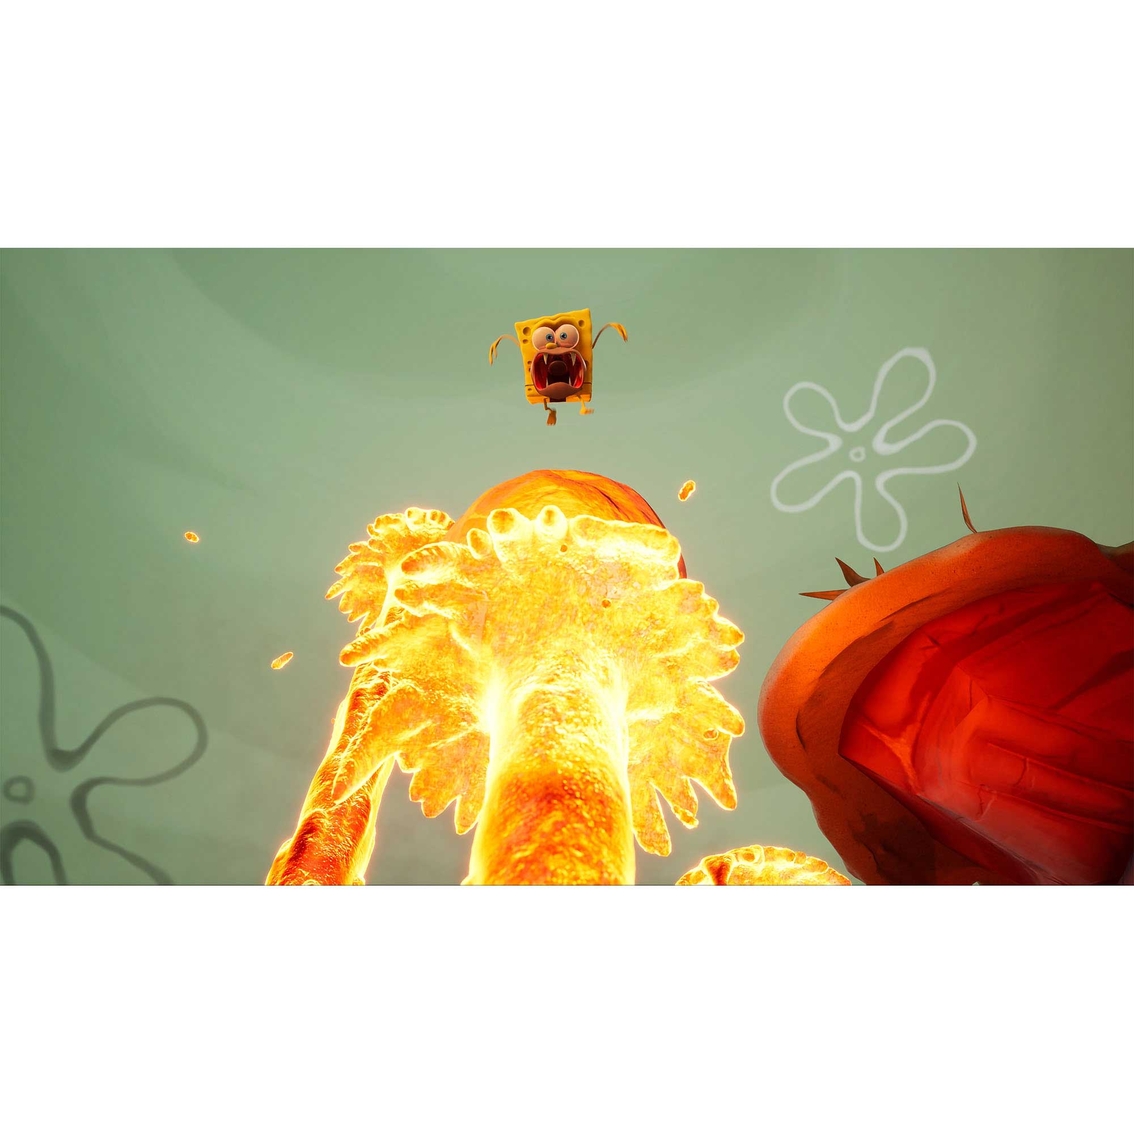 SpongeBob SquarePants: The Cosmic Shake (Xbox One) - Image 8 of 10